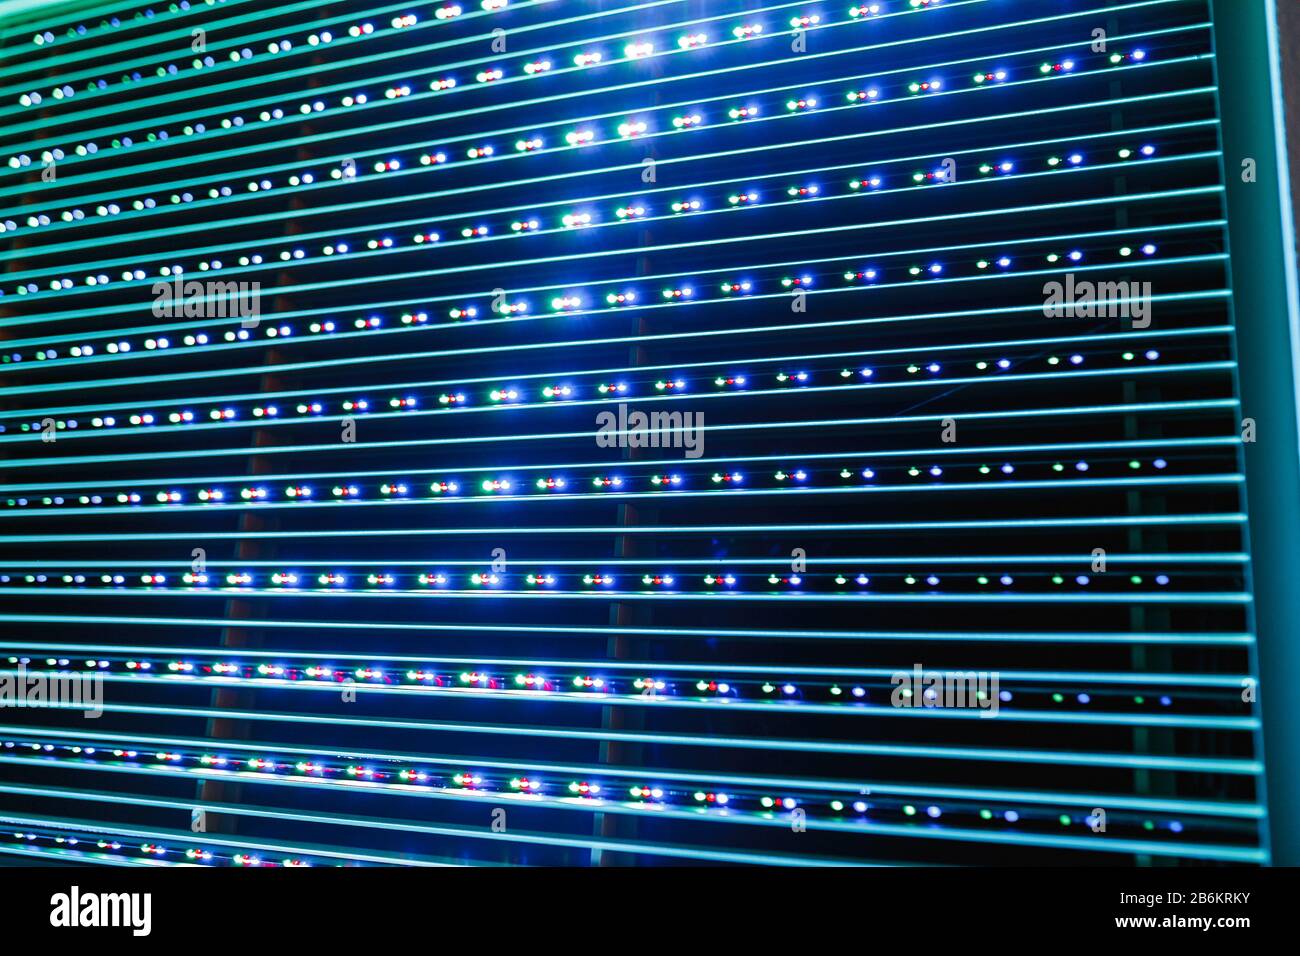 Closeup of pixels on an a plasma TV screen. Stock Photo